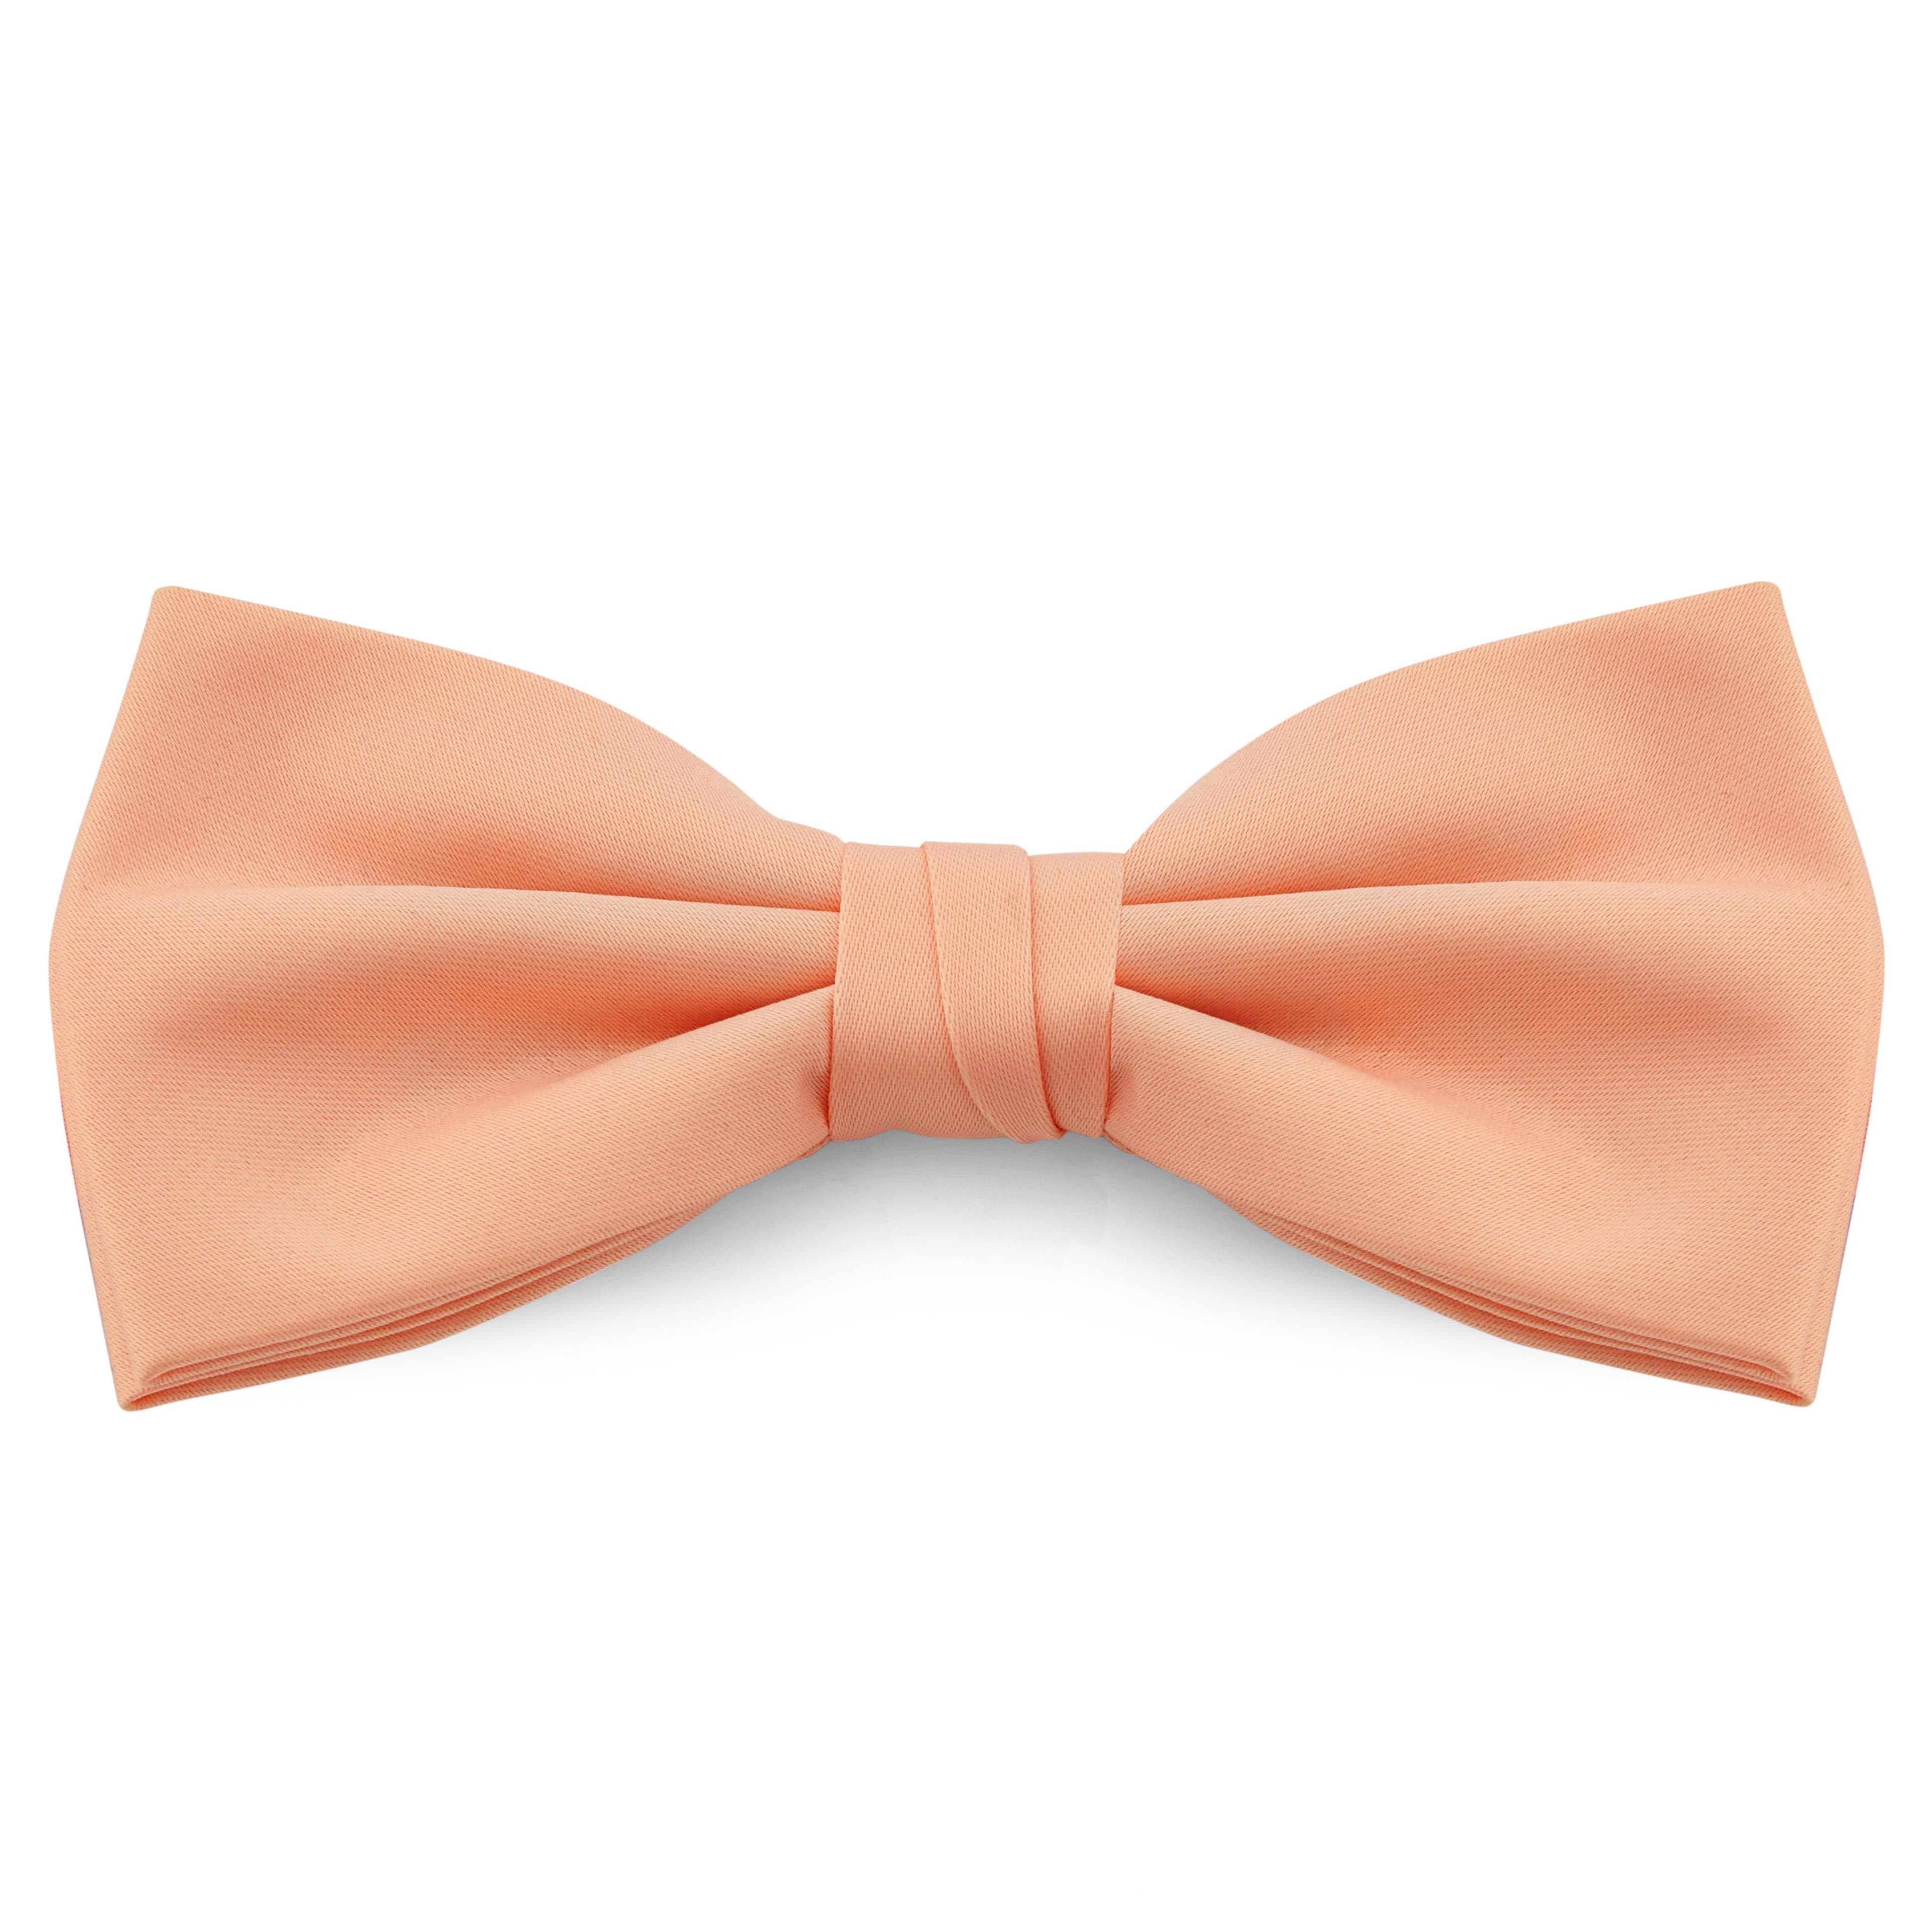 XL Salmon Pink Basic Pre-Tied Bow Tie